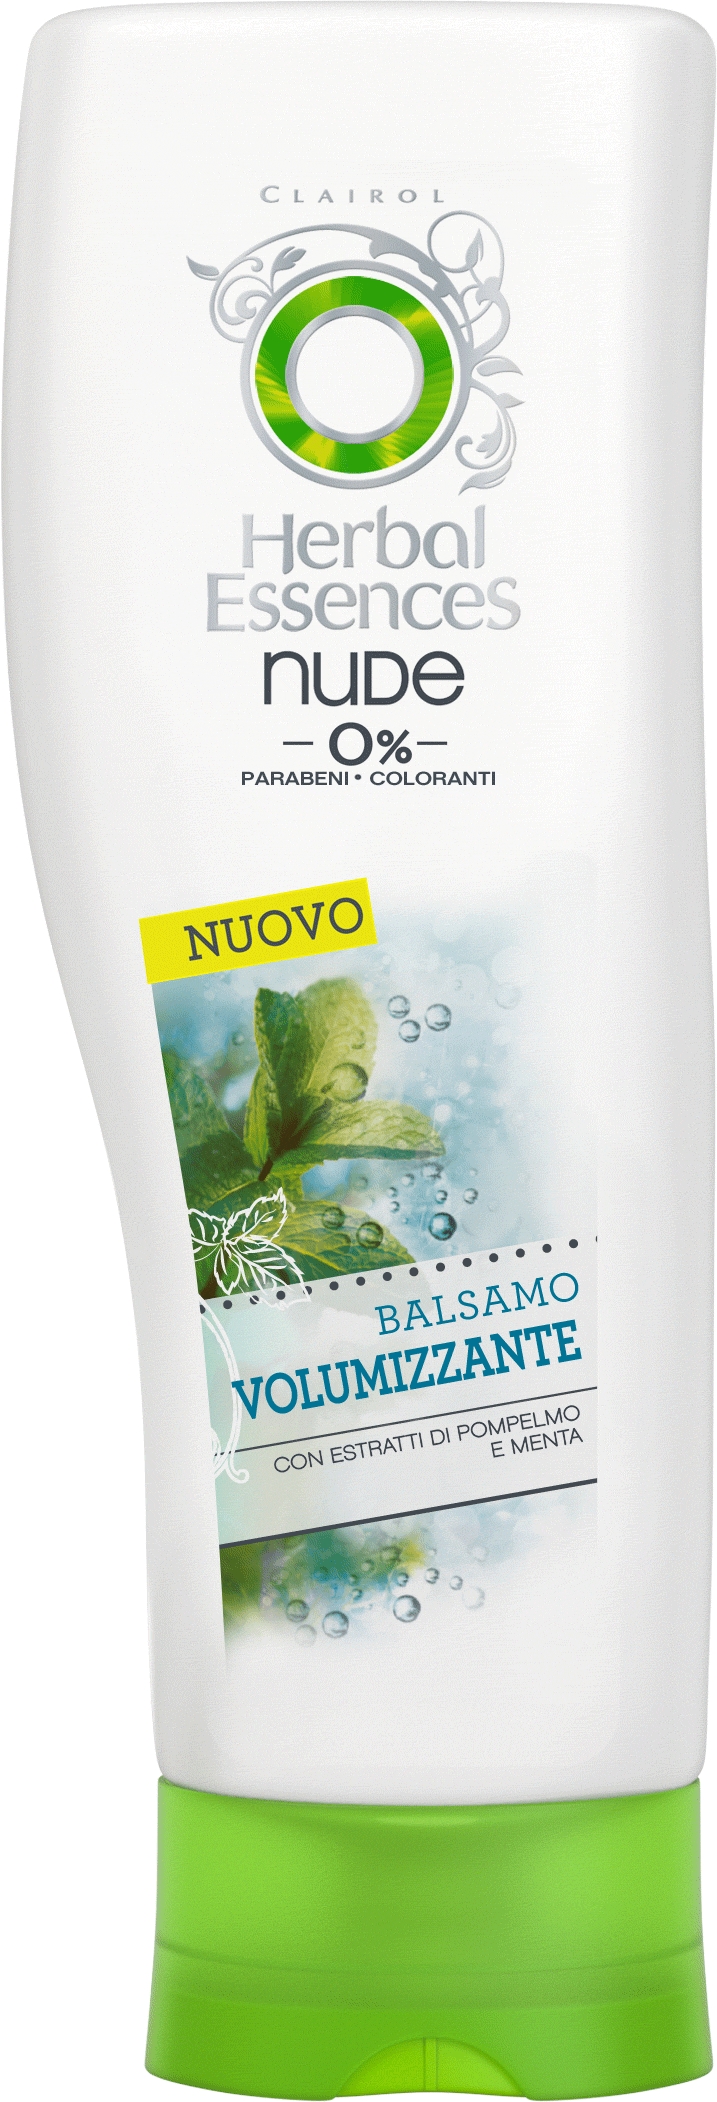 Image of Herbal Essences Nude Balsamo Volumizzante 200 ml 4084500127494